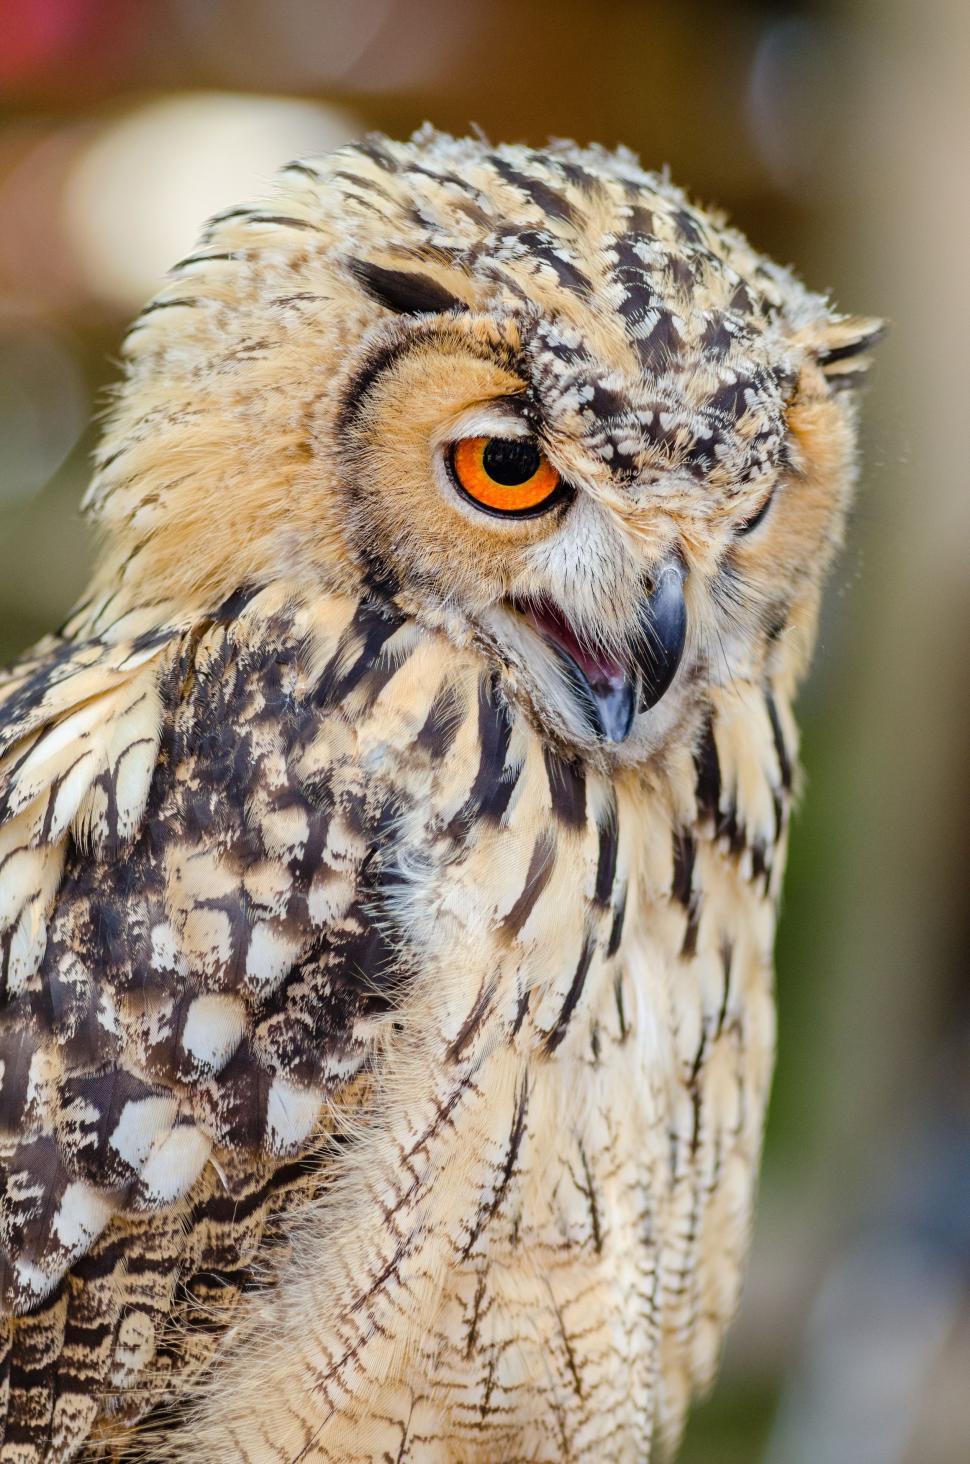 Free Image of Bubo owl 